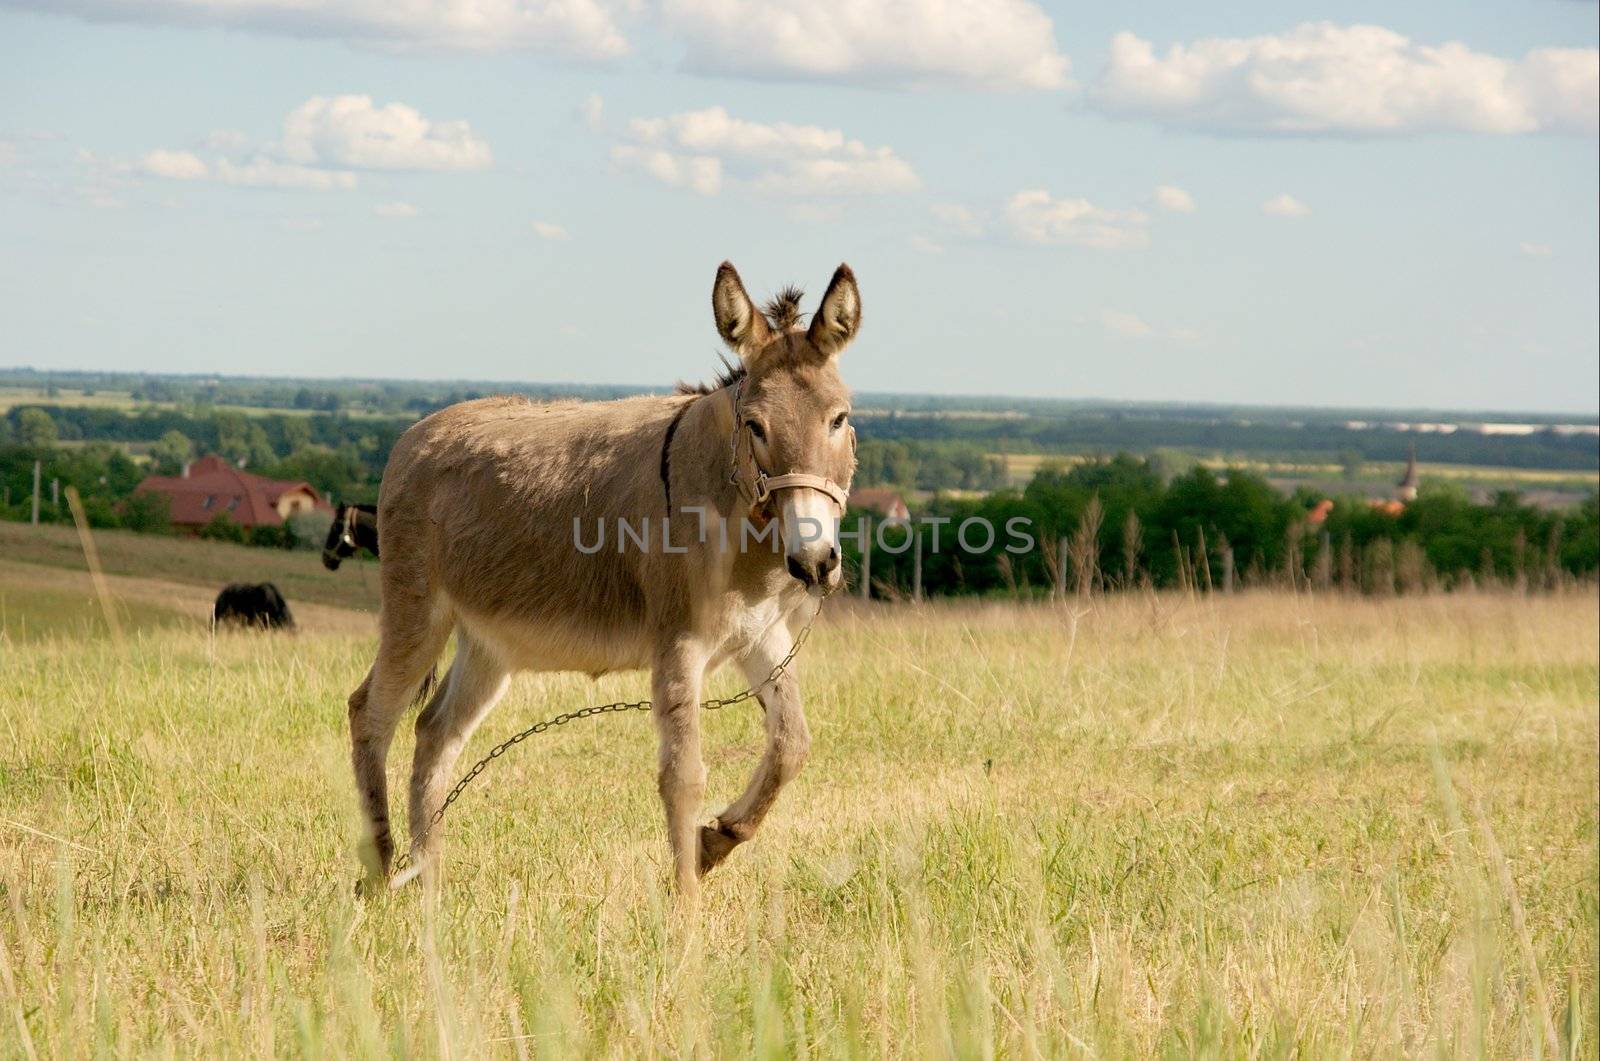 Gray donkey walking on a bright field